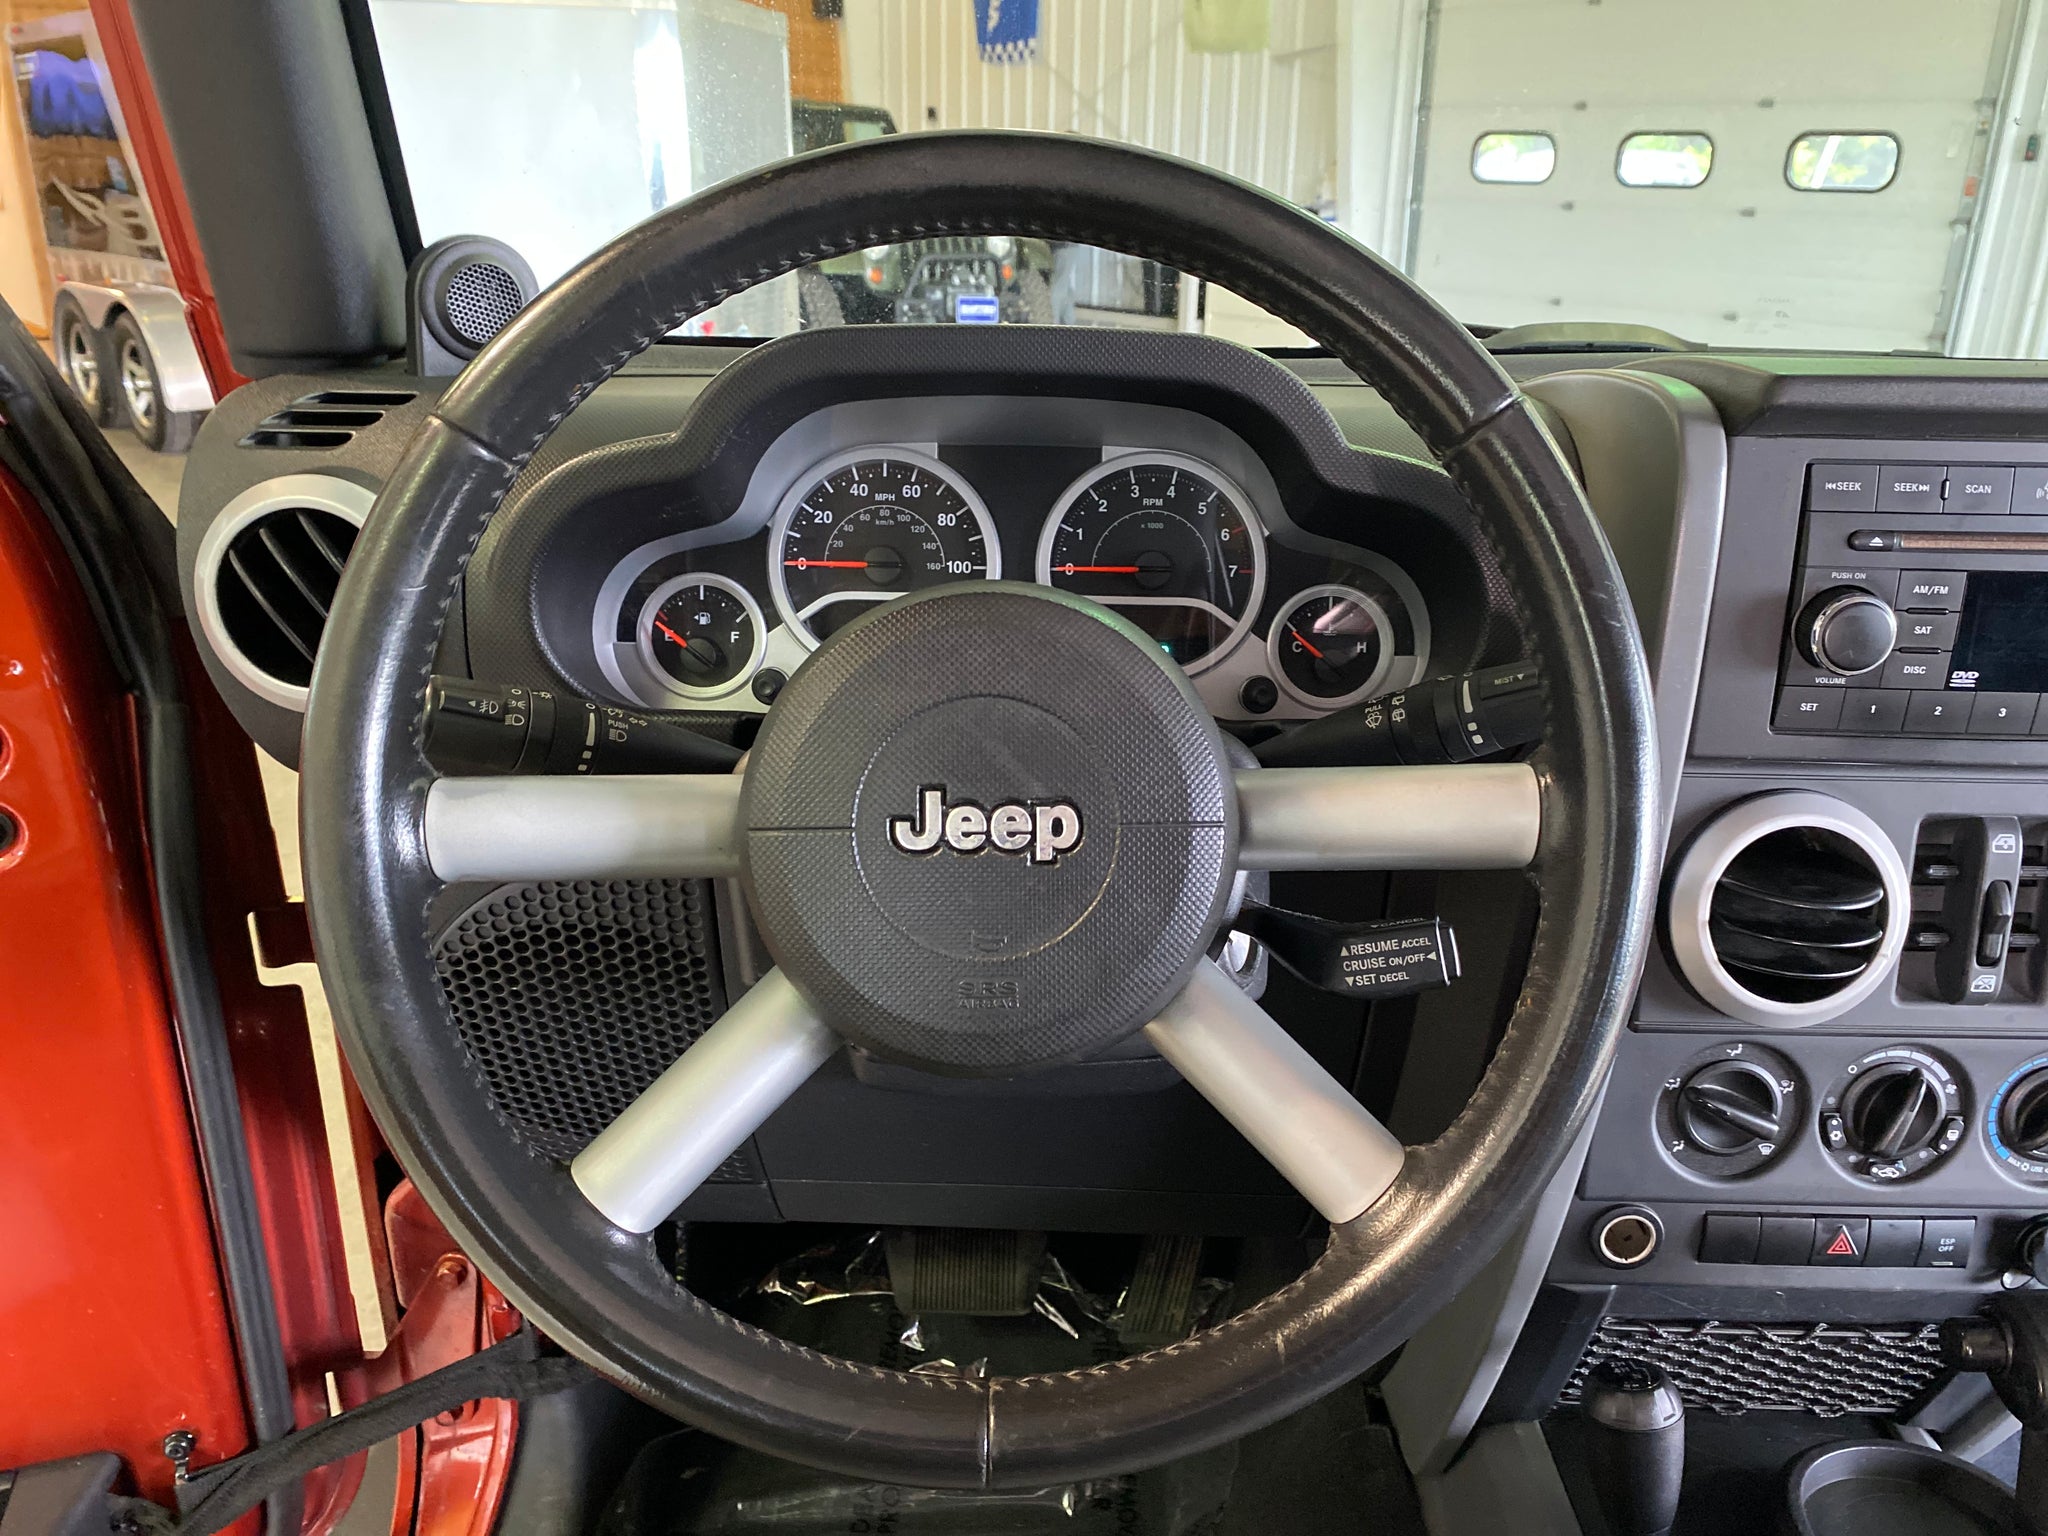 2009 Jeep Wrangler Unlimited Sahara 4WD - ShiftedMN